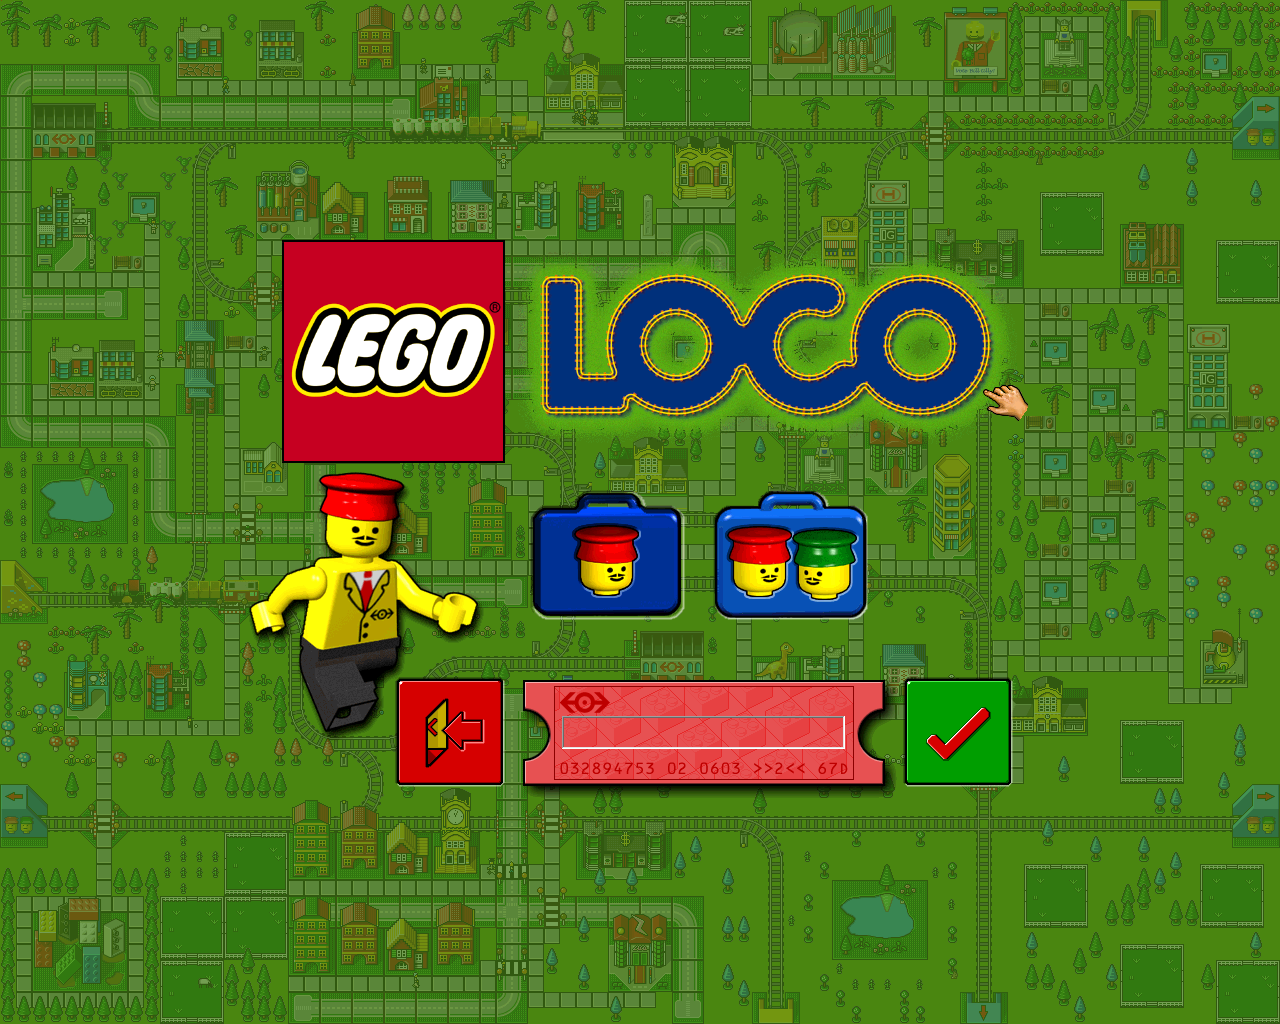 LEGO Loco Classic Review